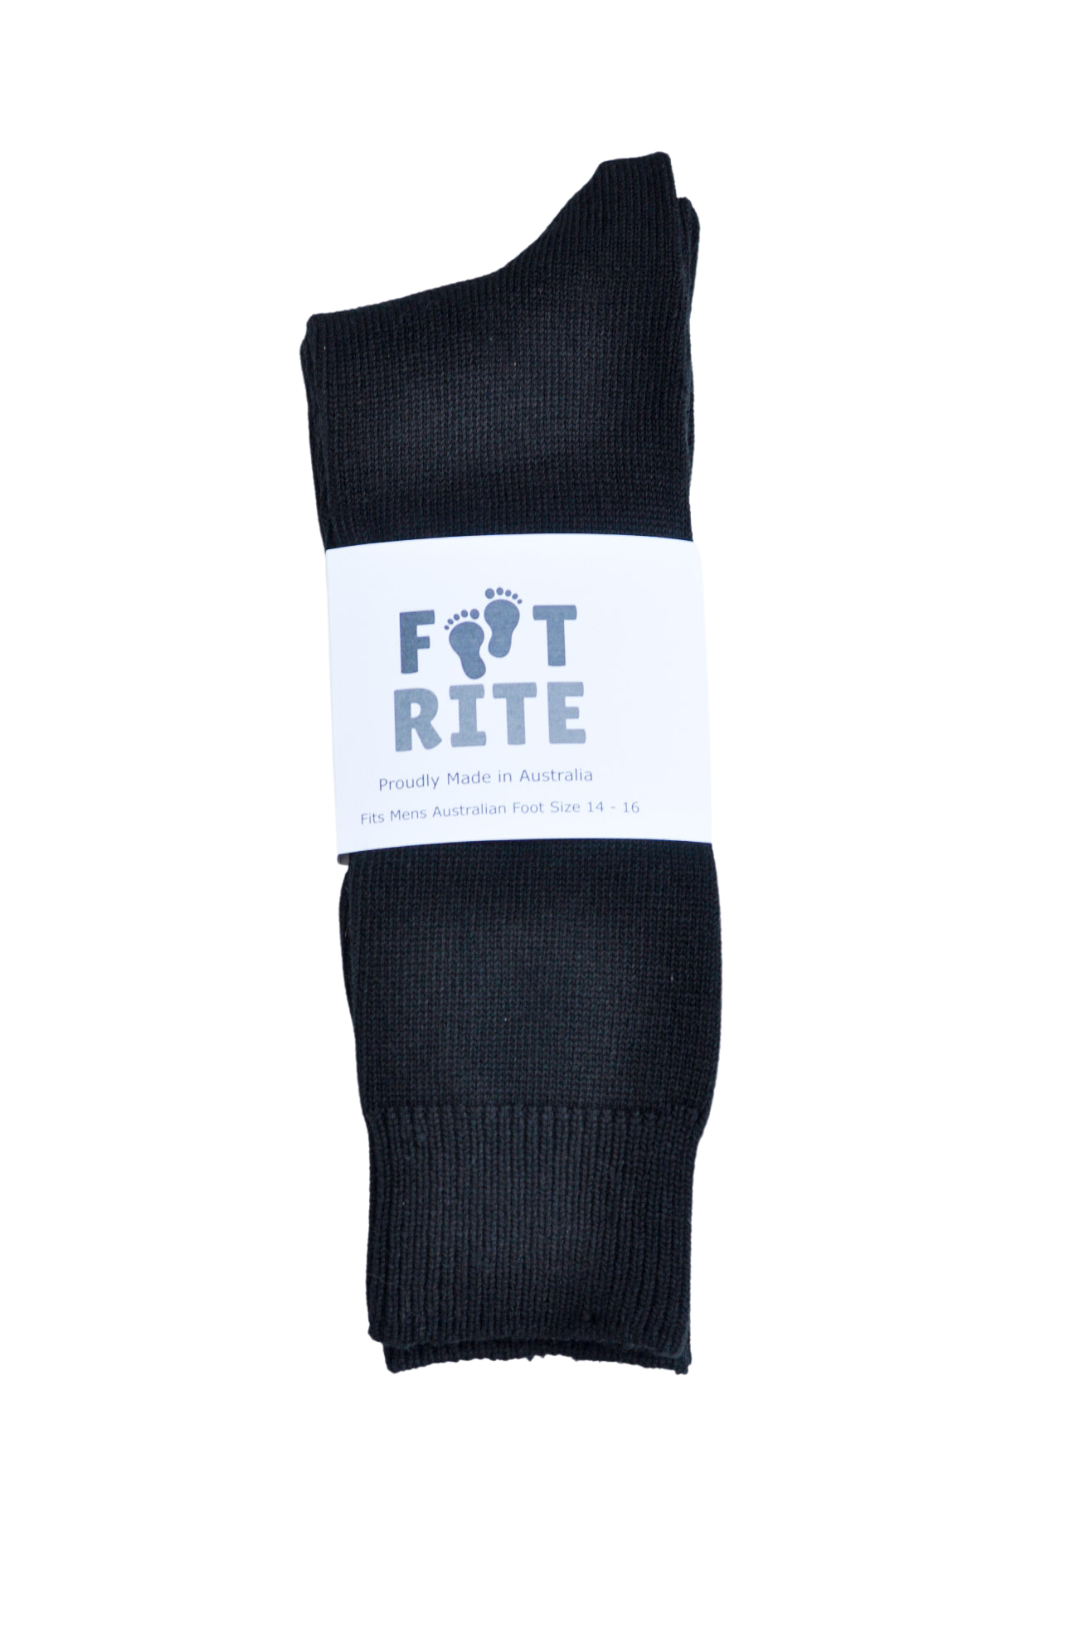 Foot Rite Extra Large Black Socks for Men sized 14 to 21 shoe - Australian Made